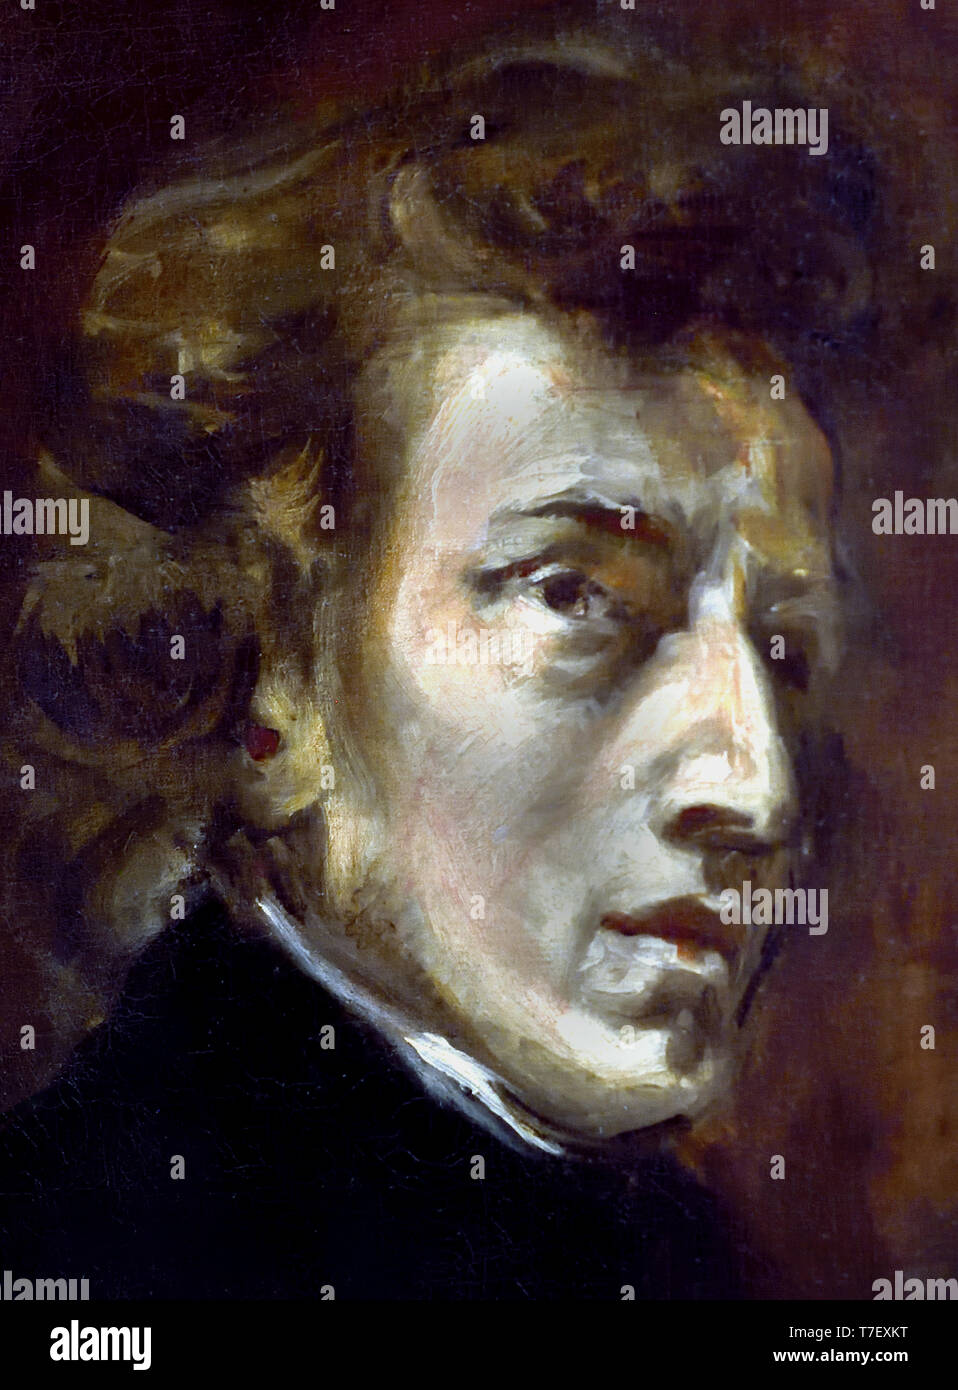 Ritratto di Frédéric Chopin, compositore circa 1838 da Eugène Delacroix 1798 - 1863 ( ( Frédéric François Chopin1810 - 1849 ( Fryderyk Franciszek) compositore polacco e un virtuoso pianista ) ) Foto Stock